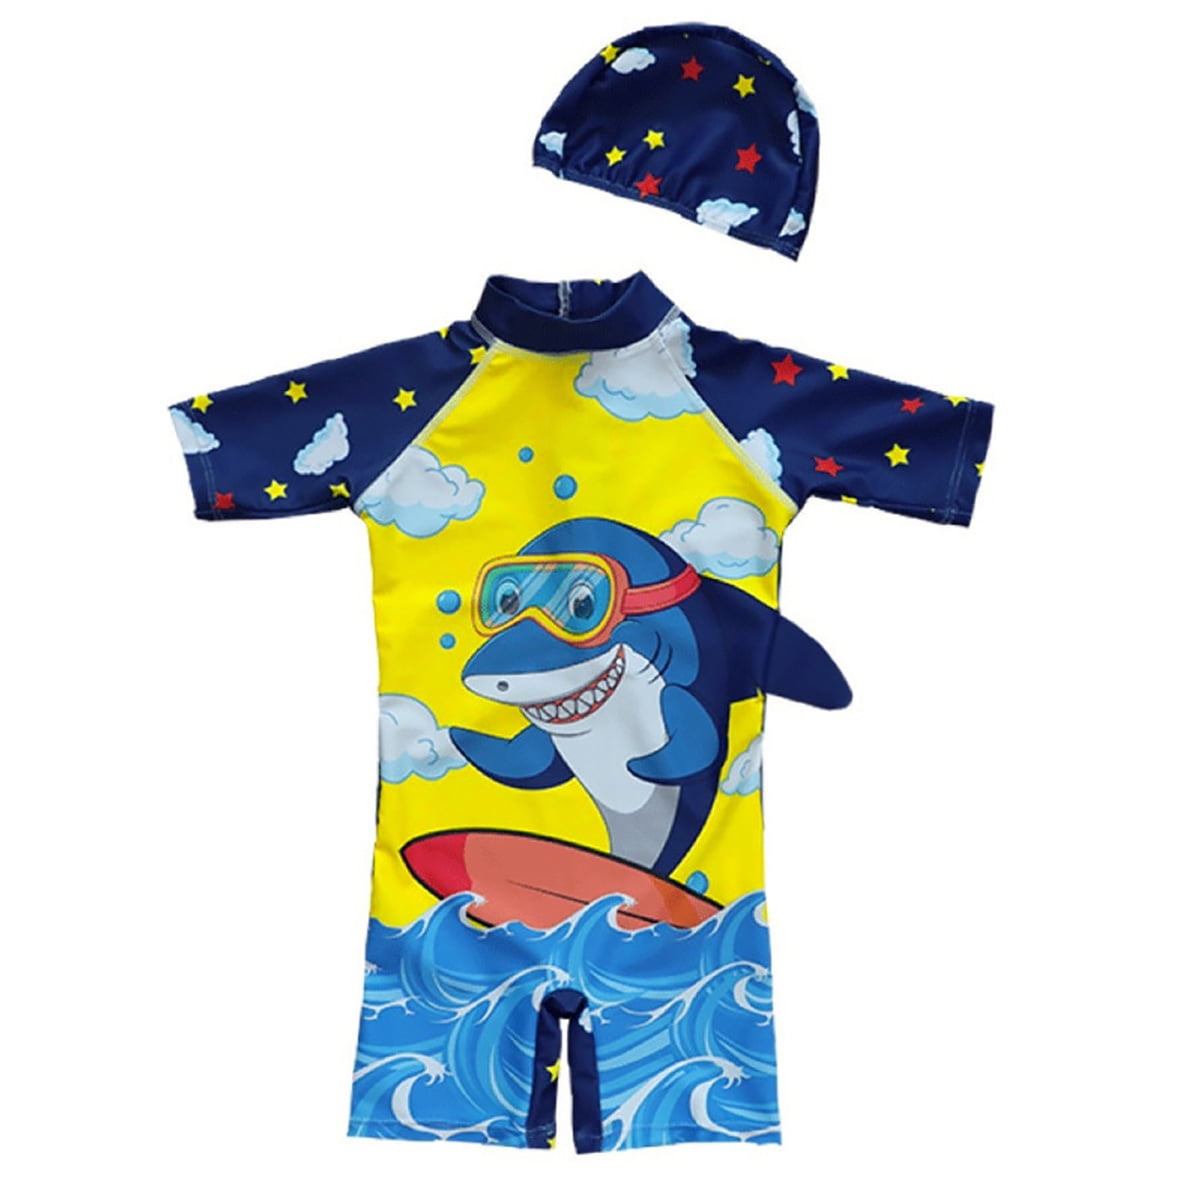 Toddler Kid Boys Long Sleeve Sun Protective Bathing Suit UPF 50 Aniamal Pattern Rash Guard with Free Hat 